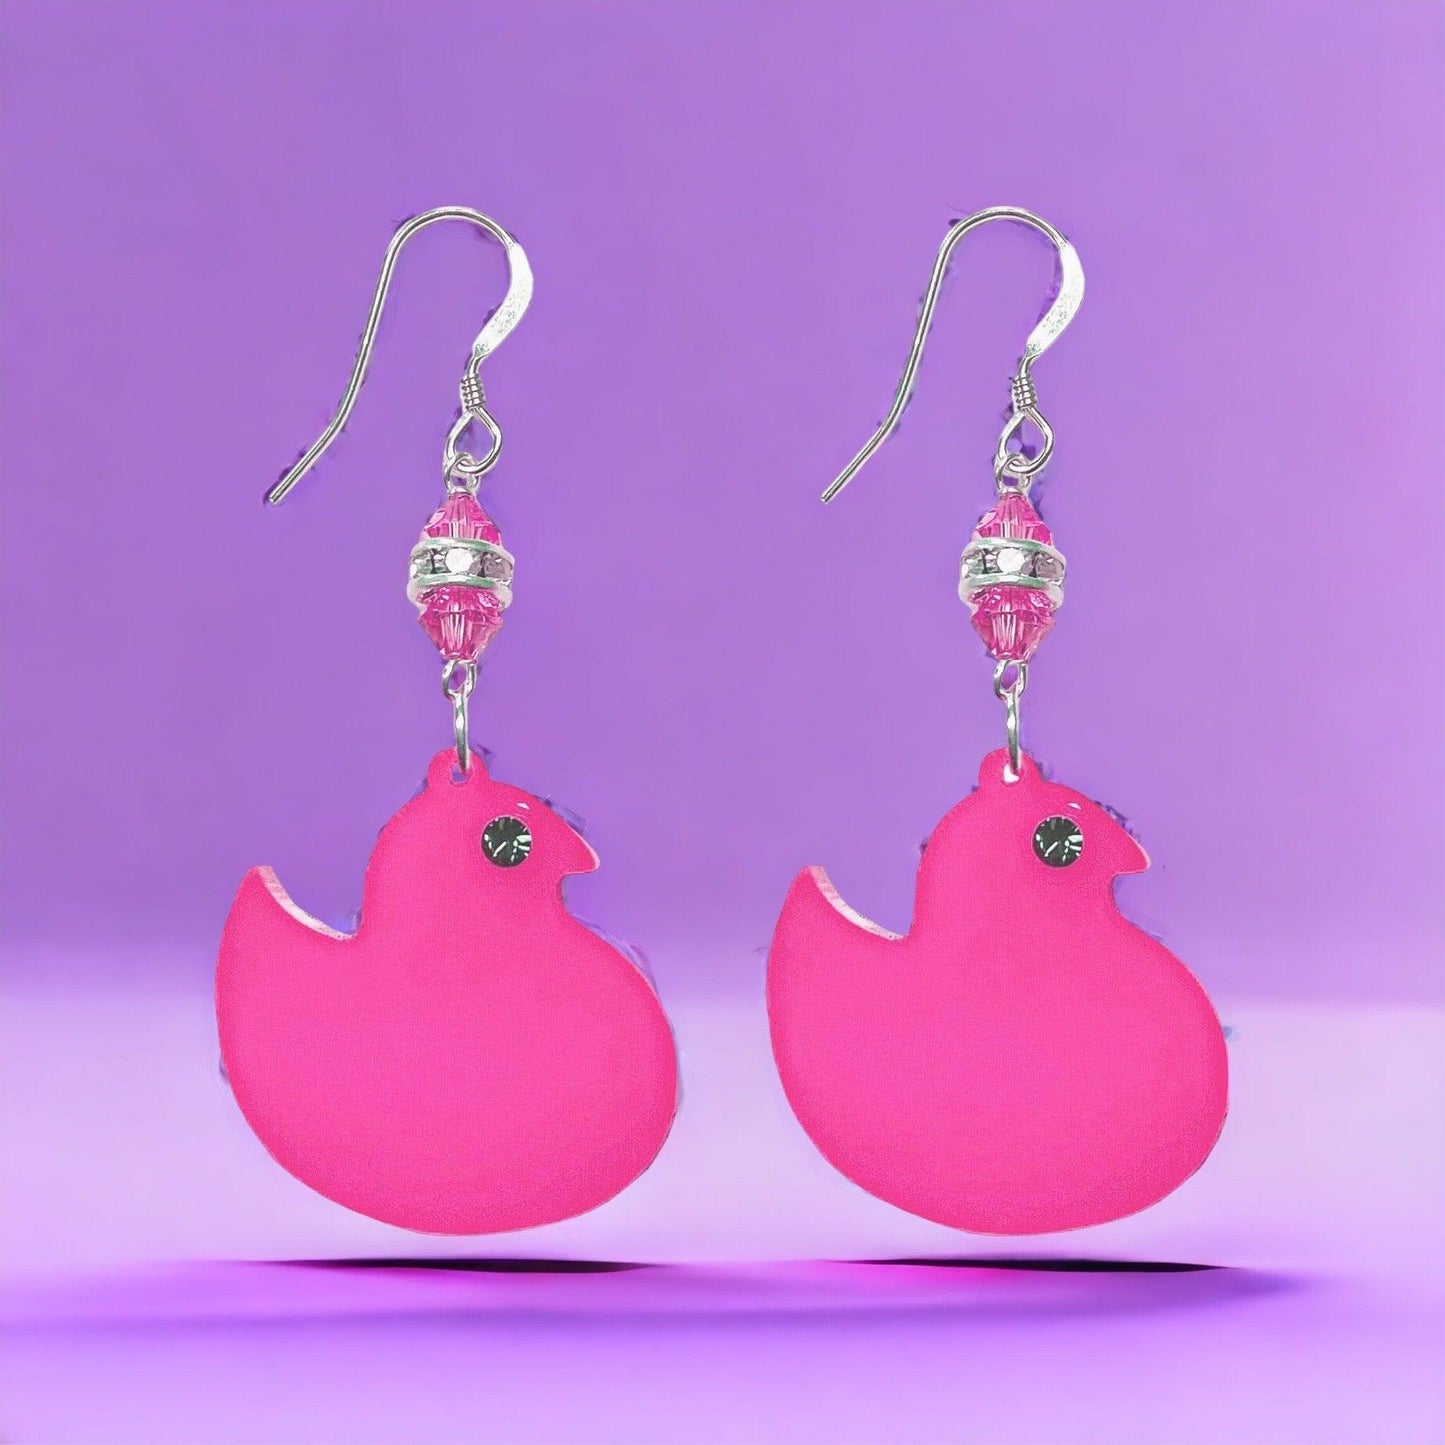 DIY Acrylic Earring Kit - Peep Chick Easter Earring - Too Cute Beads